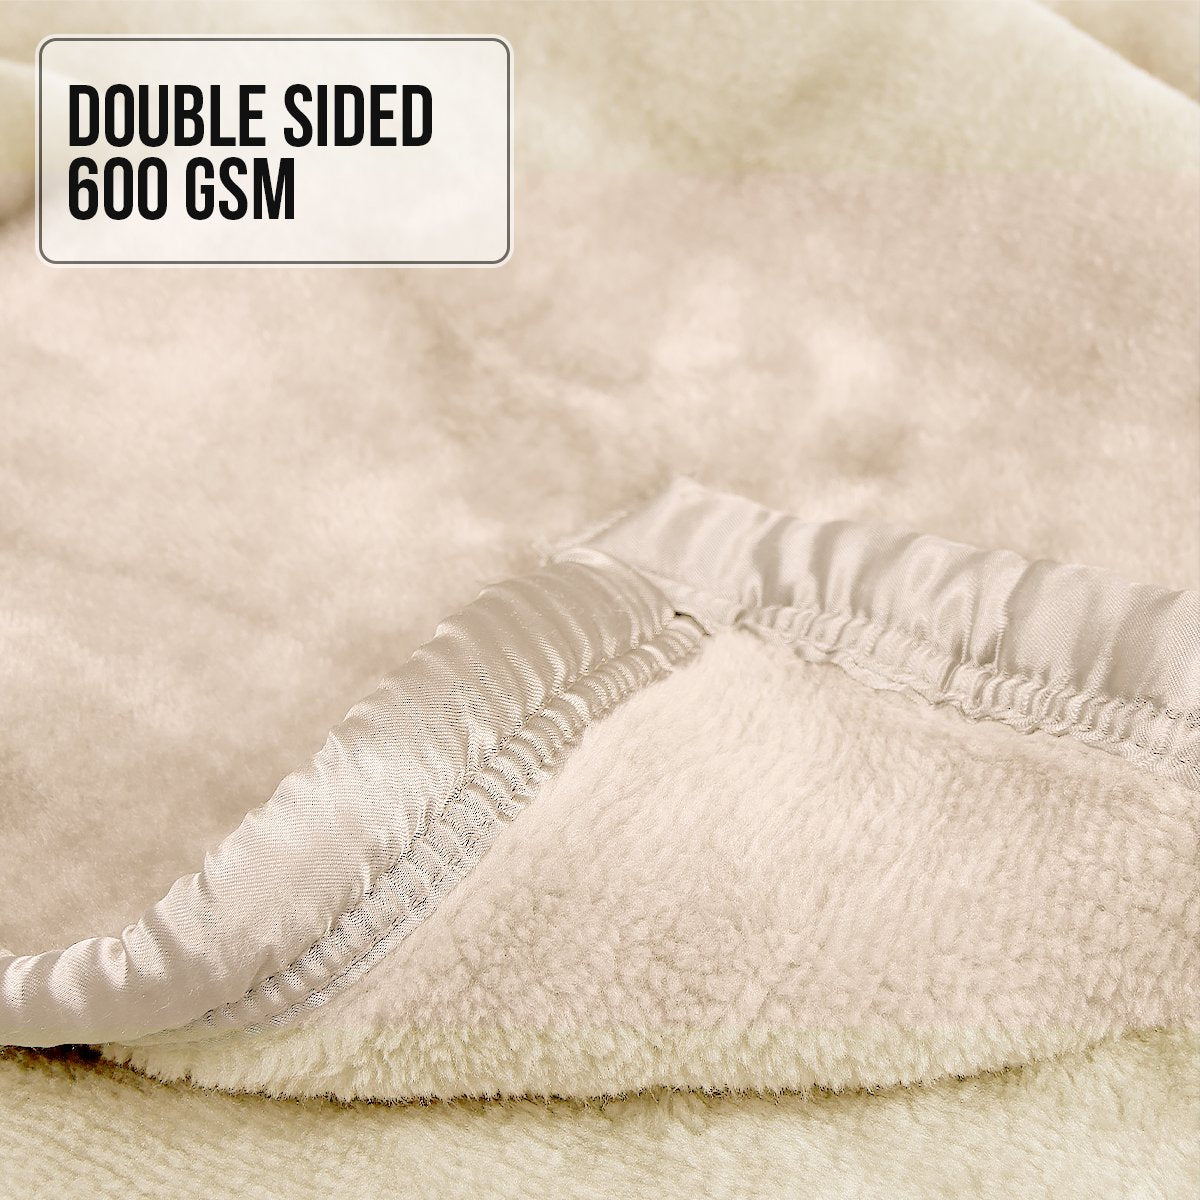 Laura Hill Mink Blanket Double Sided 600GSM Queen Size Beige - BM House & Garden